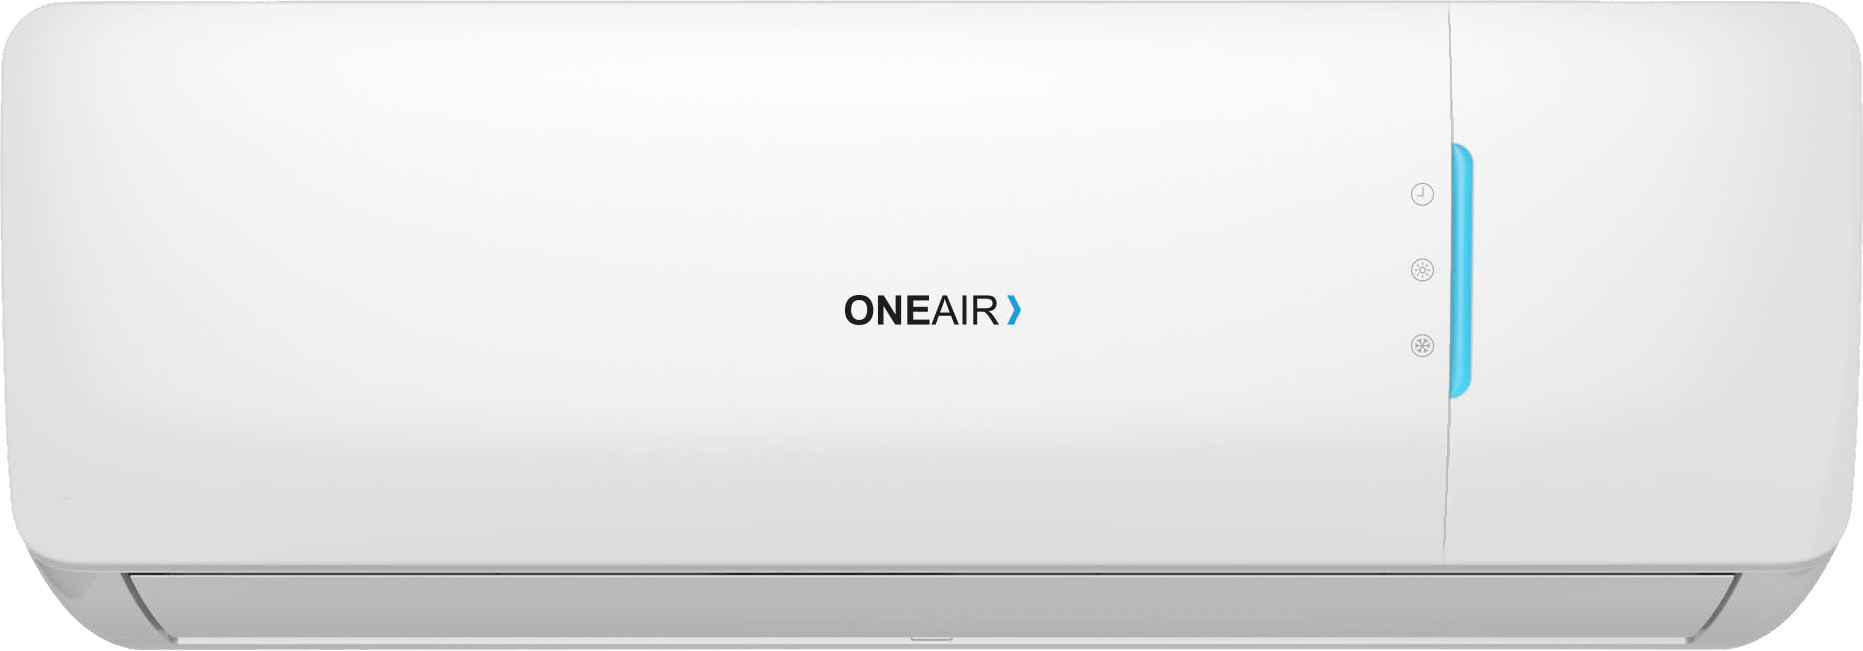 Кондиционер сплит-система OneAir OAC-24H/N1 цена 0 грн - фотография 2